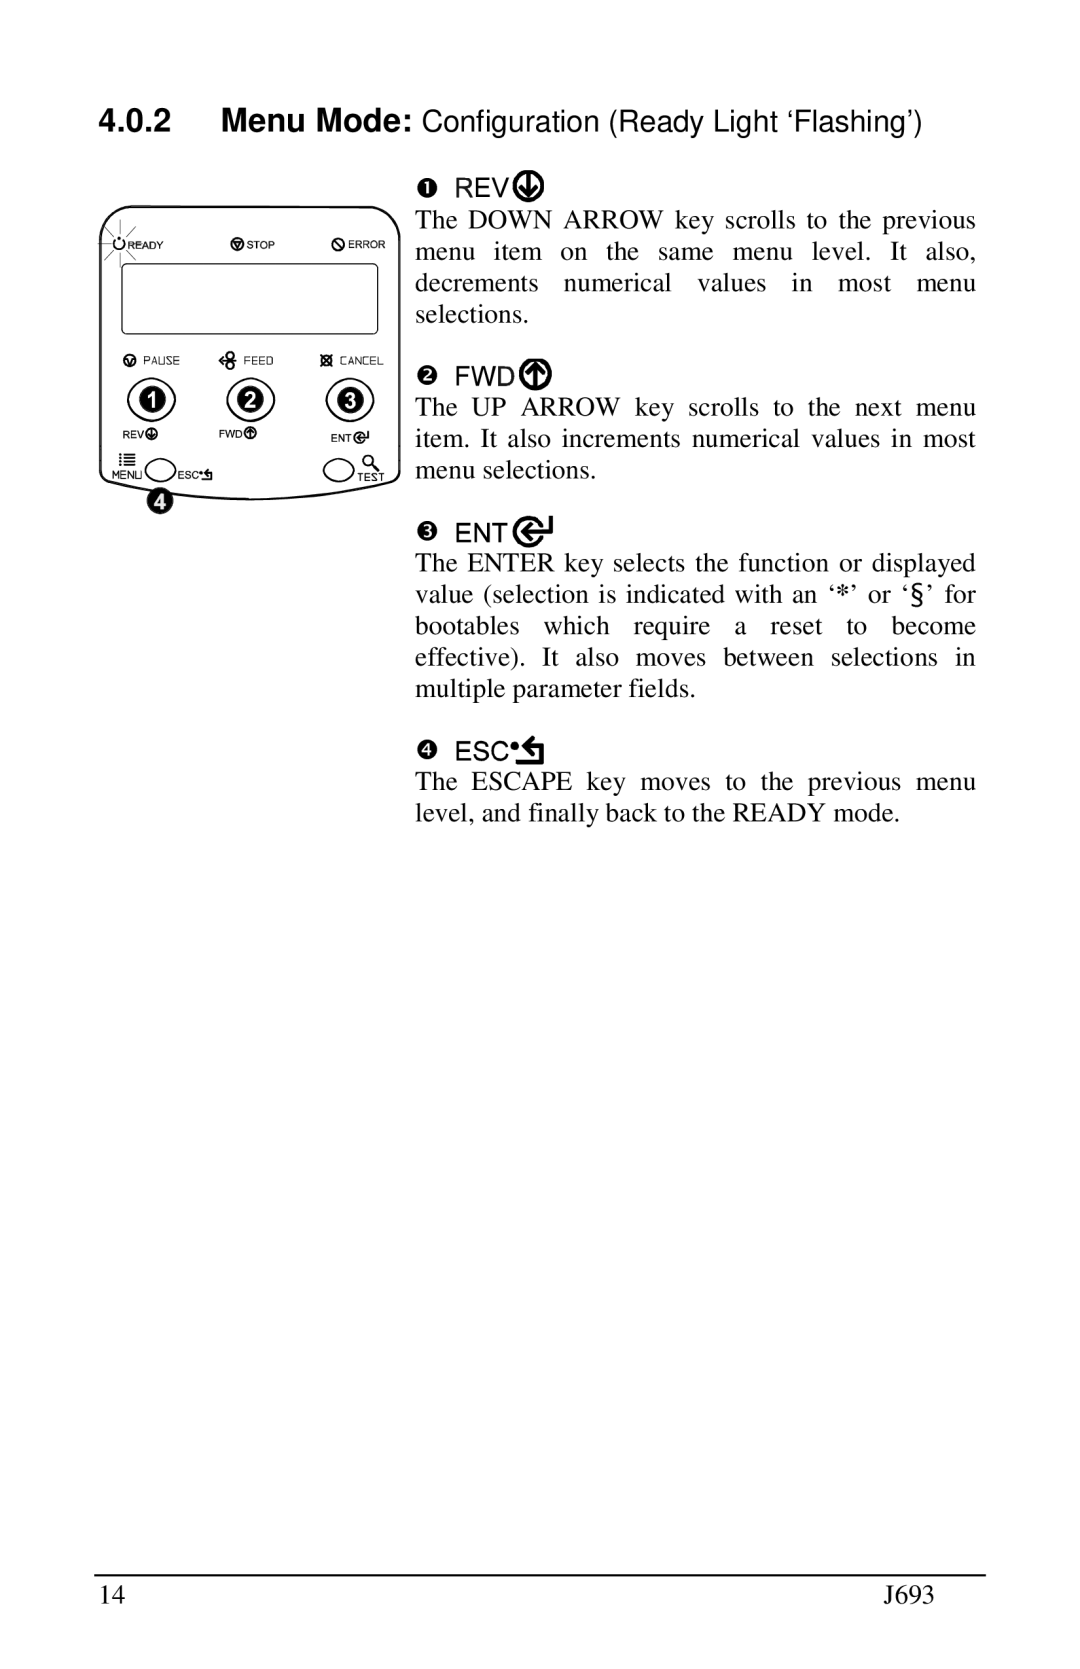 Pitney Bowes J693 manual Menu Mode Configuration Ready Light ‘Flashing’ 